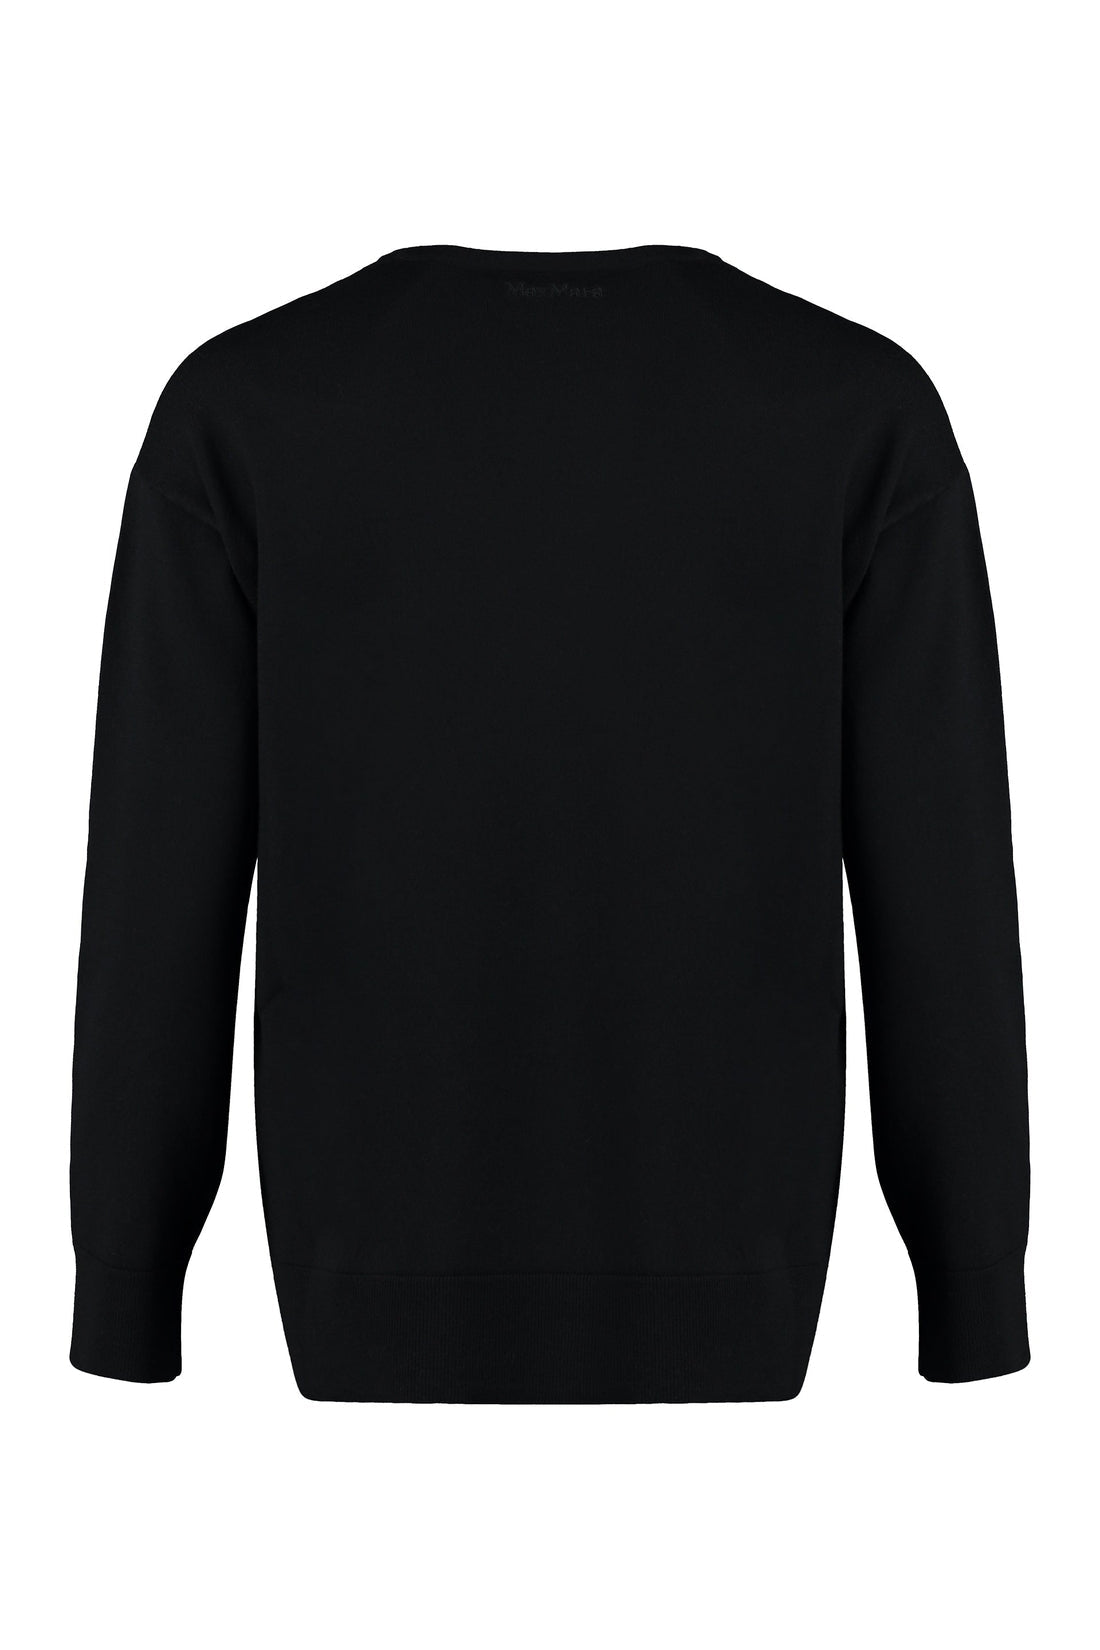 S MAX MARA-OUTLET-SALE-Amburgo crew-neck sweater-ARCHIVIST